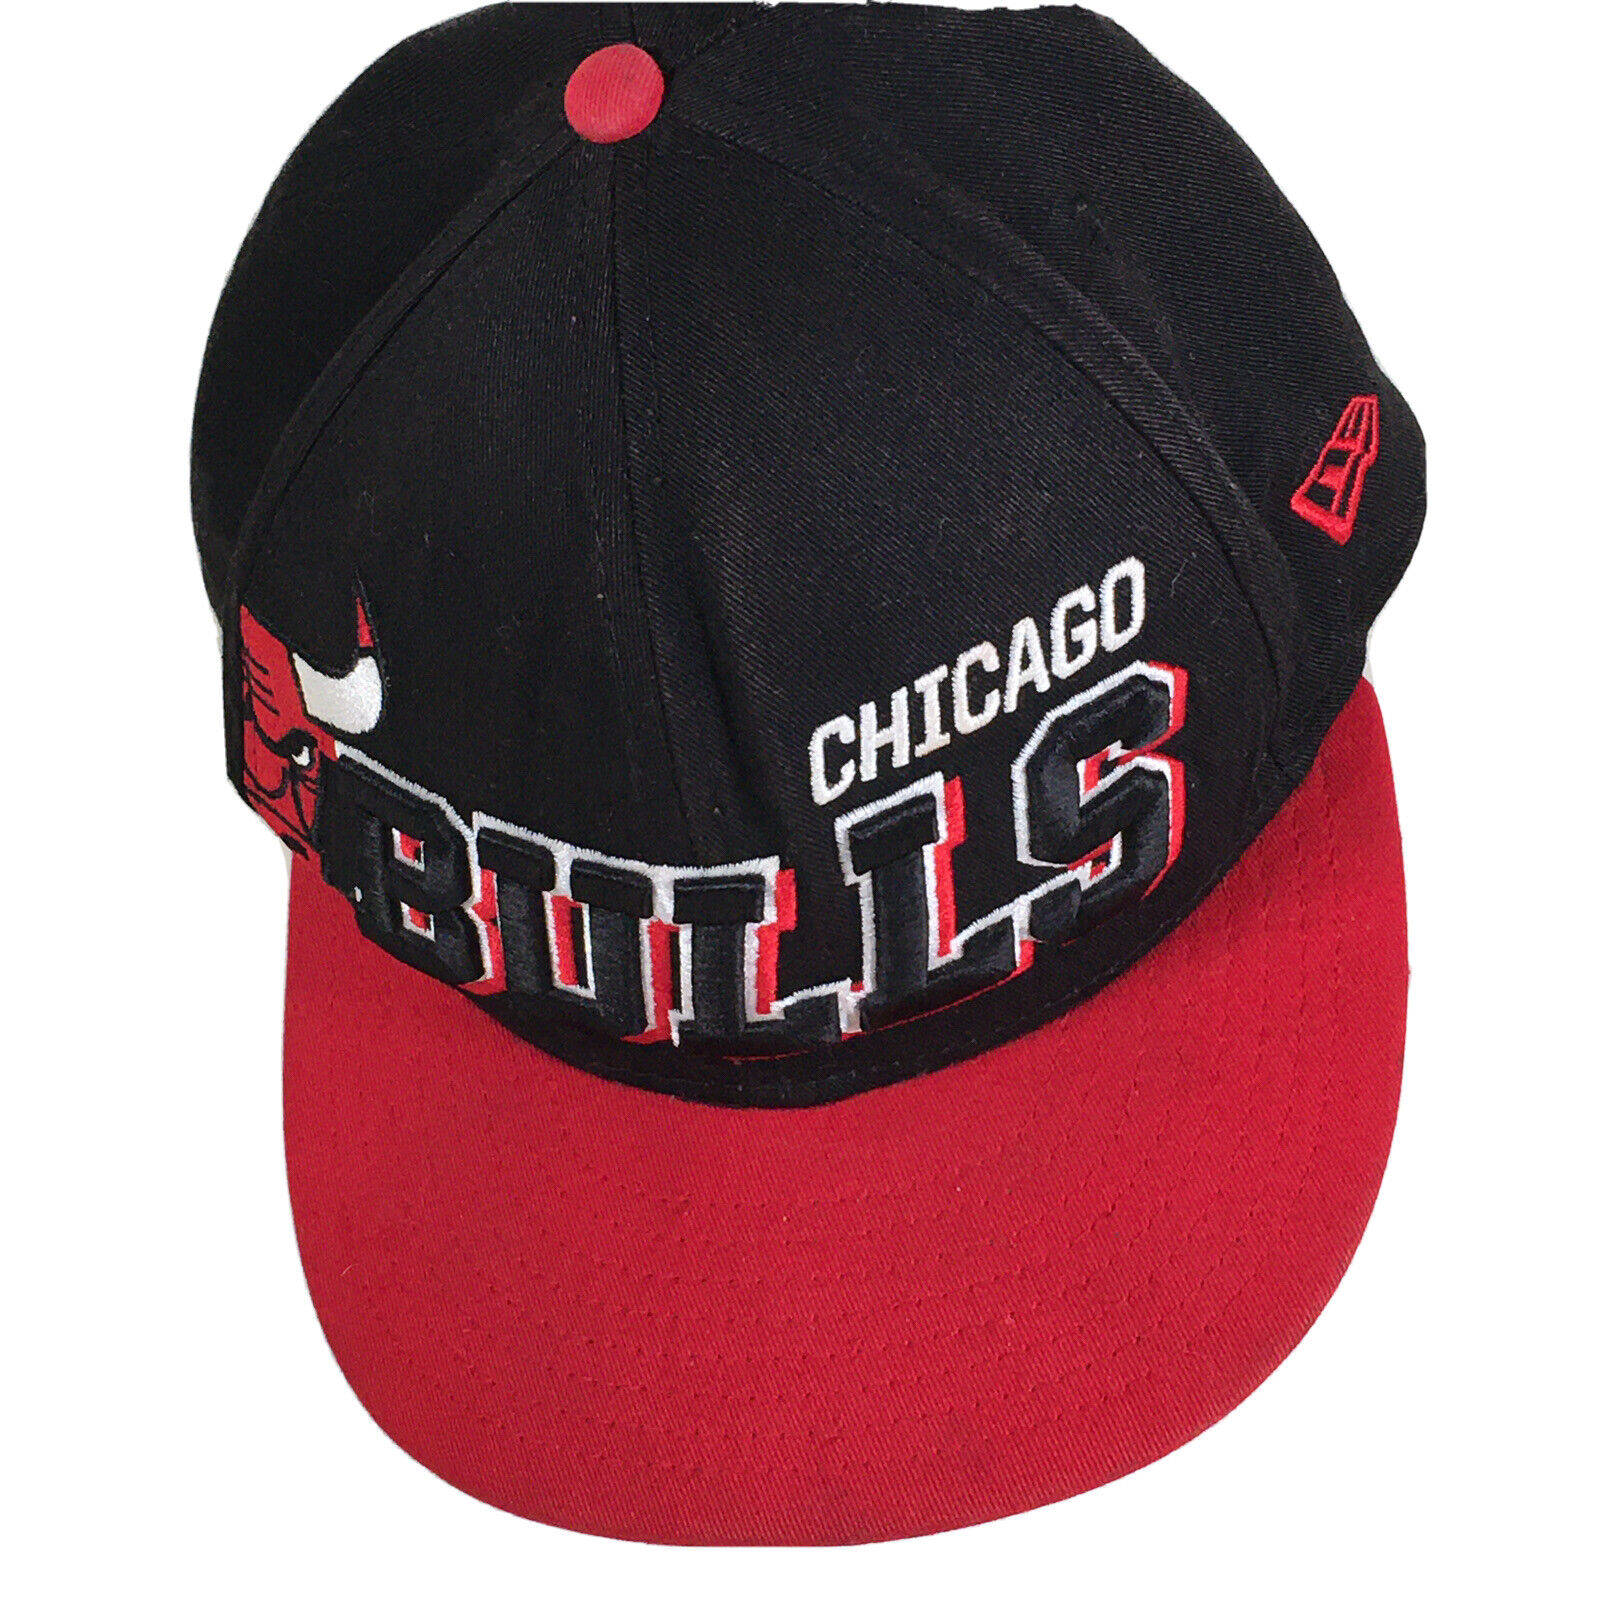 Men's New Era White/Black Chicago Bulls Back Half 9FIFTY Fitted Hat